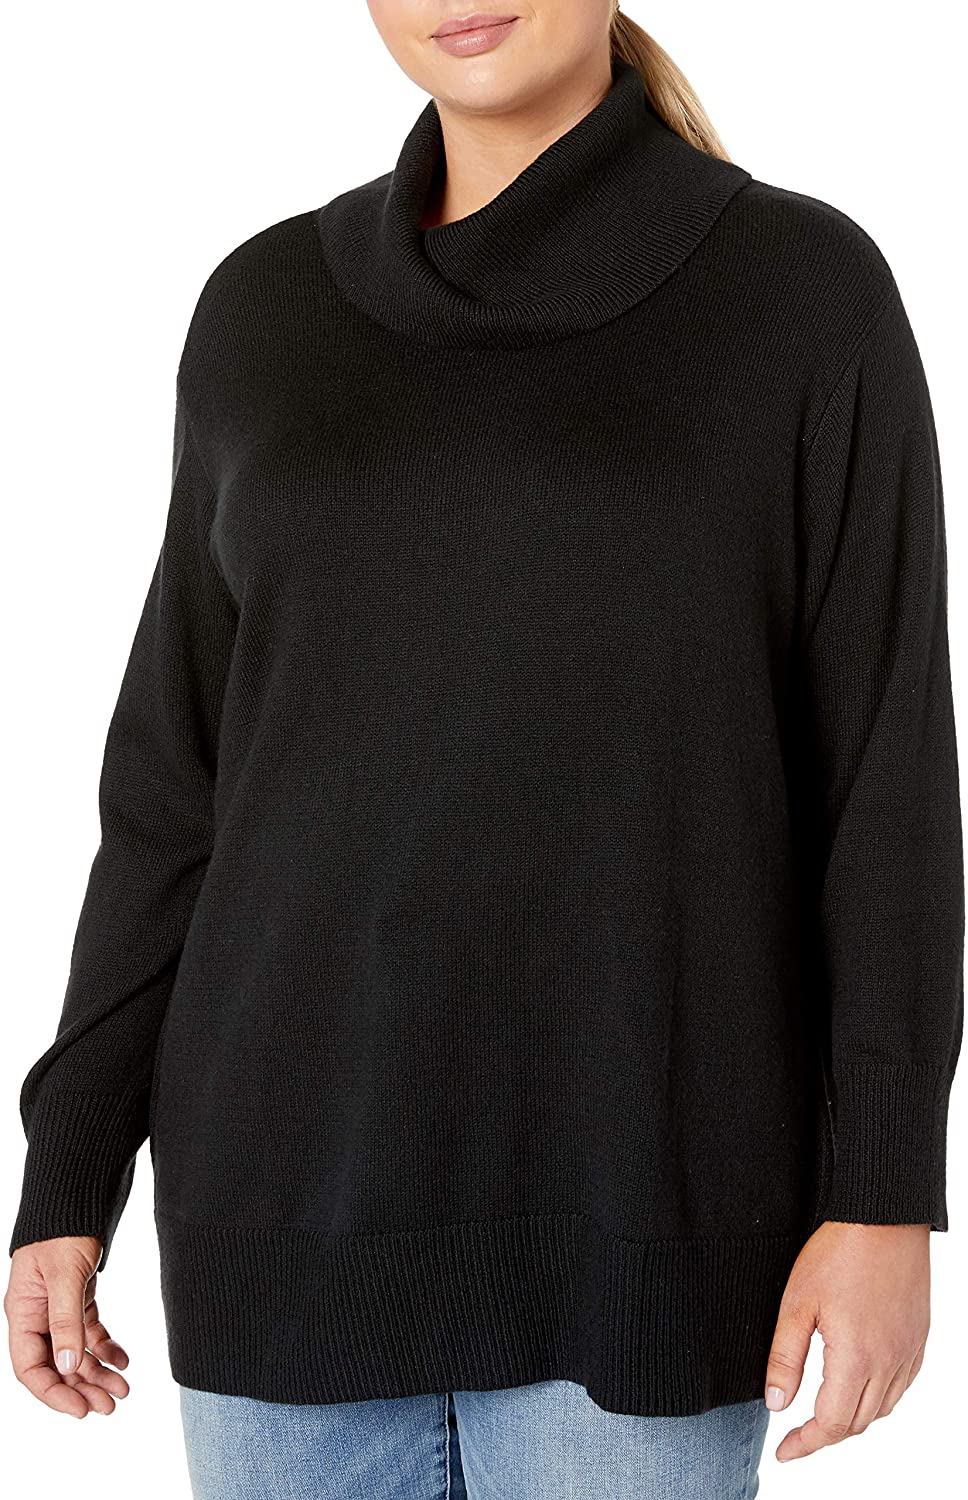 Plus Size Turtleneck Sweater 09